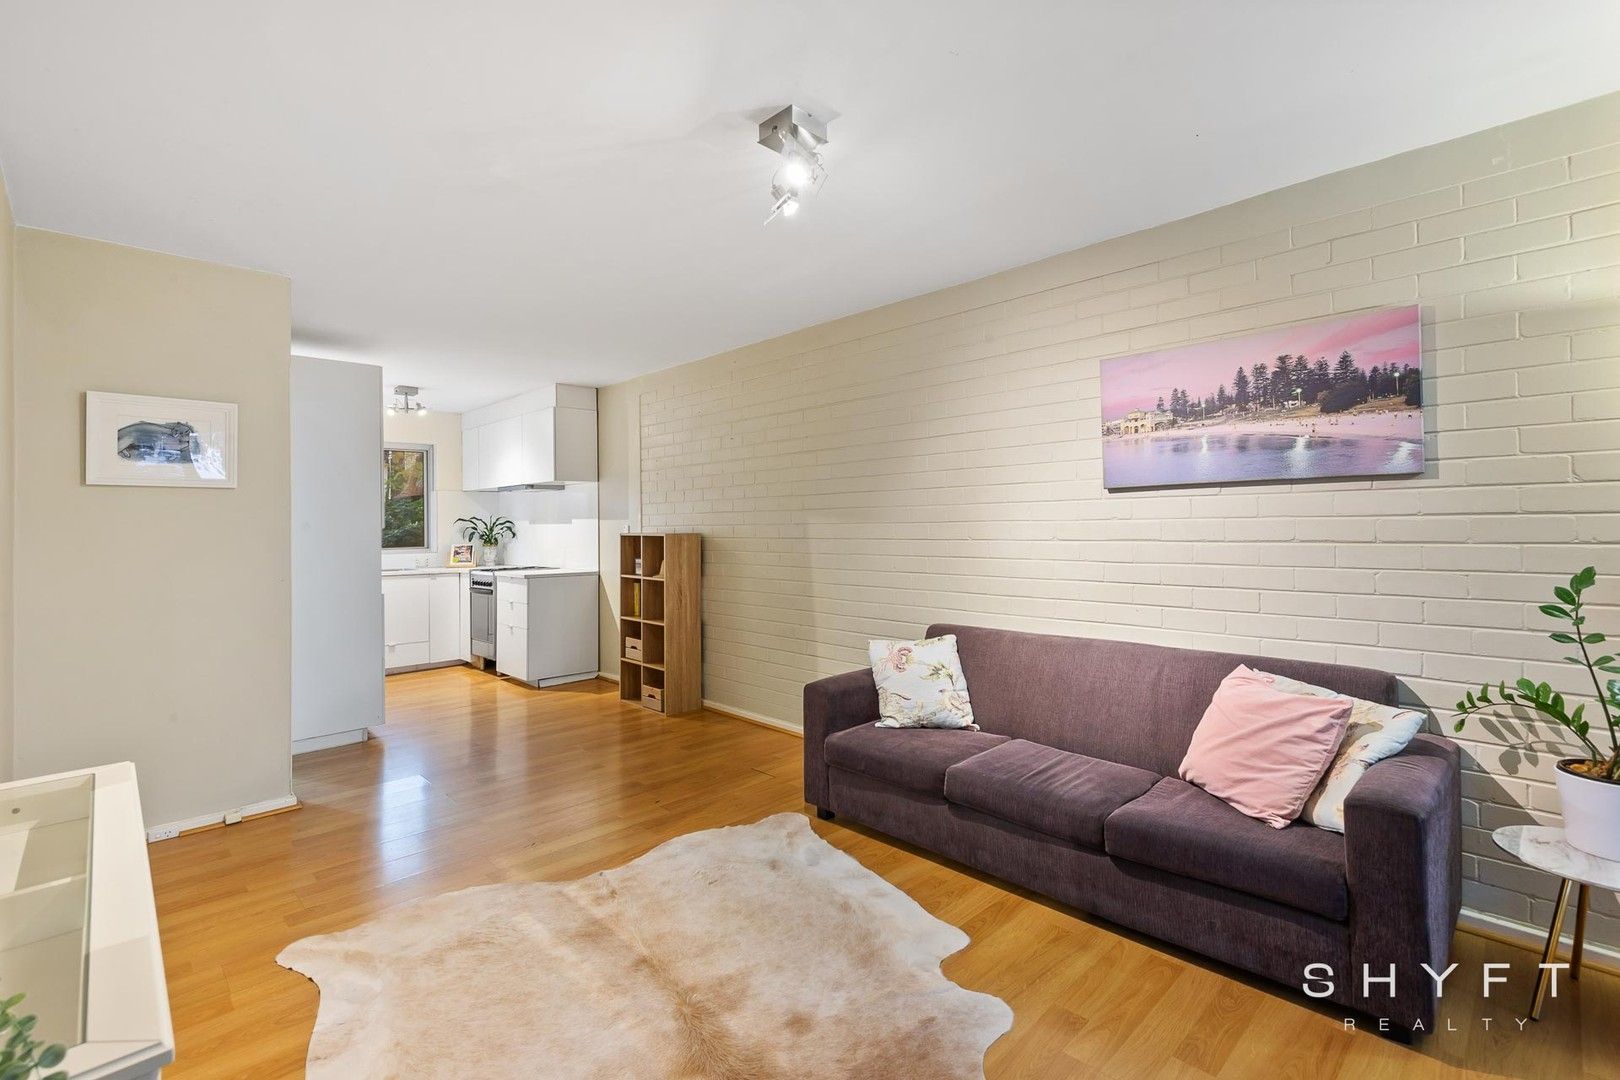 2 bedrooms Apartment / Unit / Flat in 7/746 Beaufort Street MOUNT LAWLEY WA, 6050